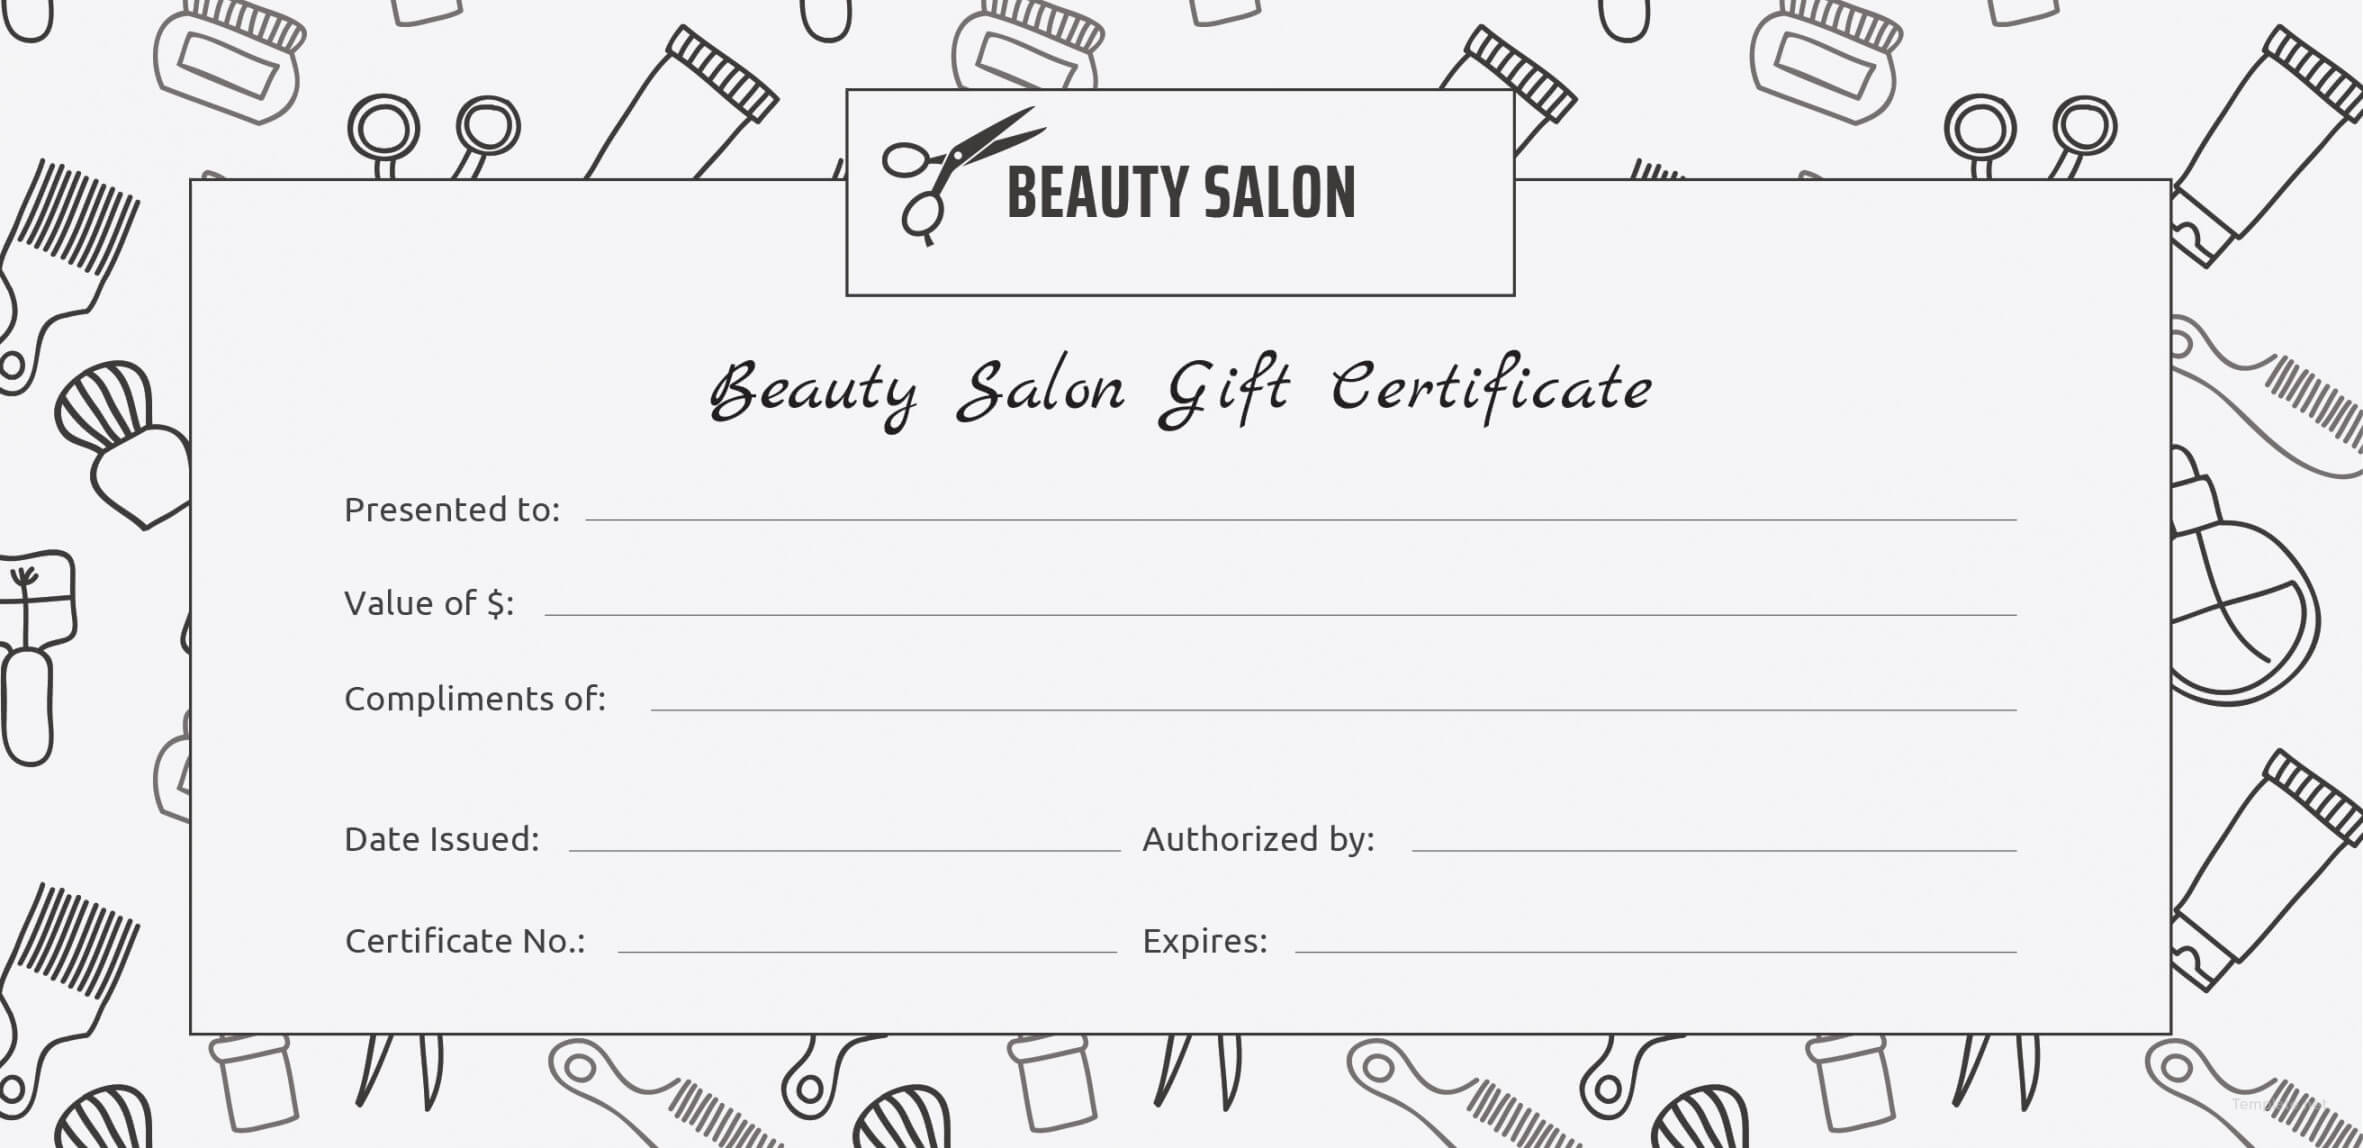 Editable Beauty Salon Gift Certificate Template Free Throughout Salon Gift Certificate Template